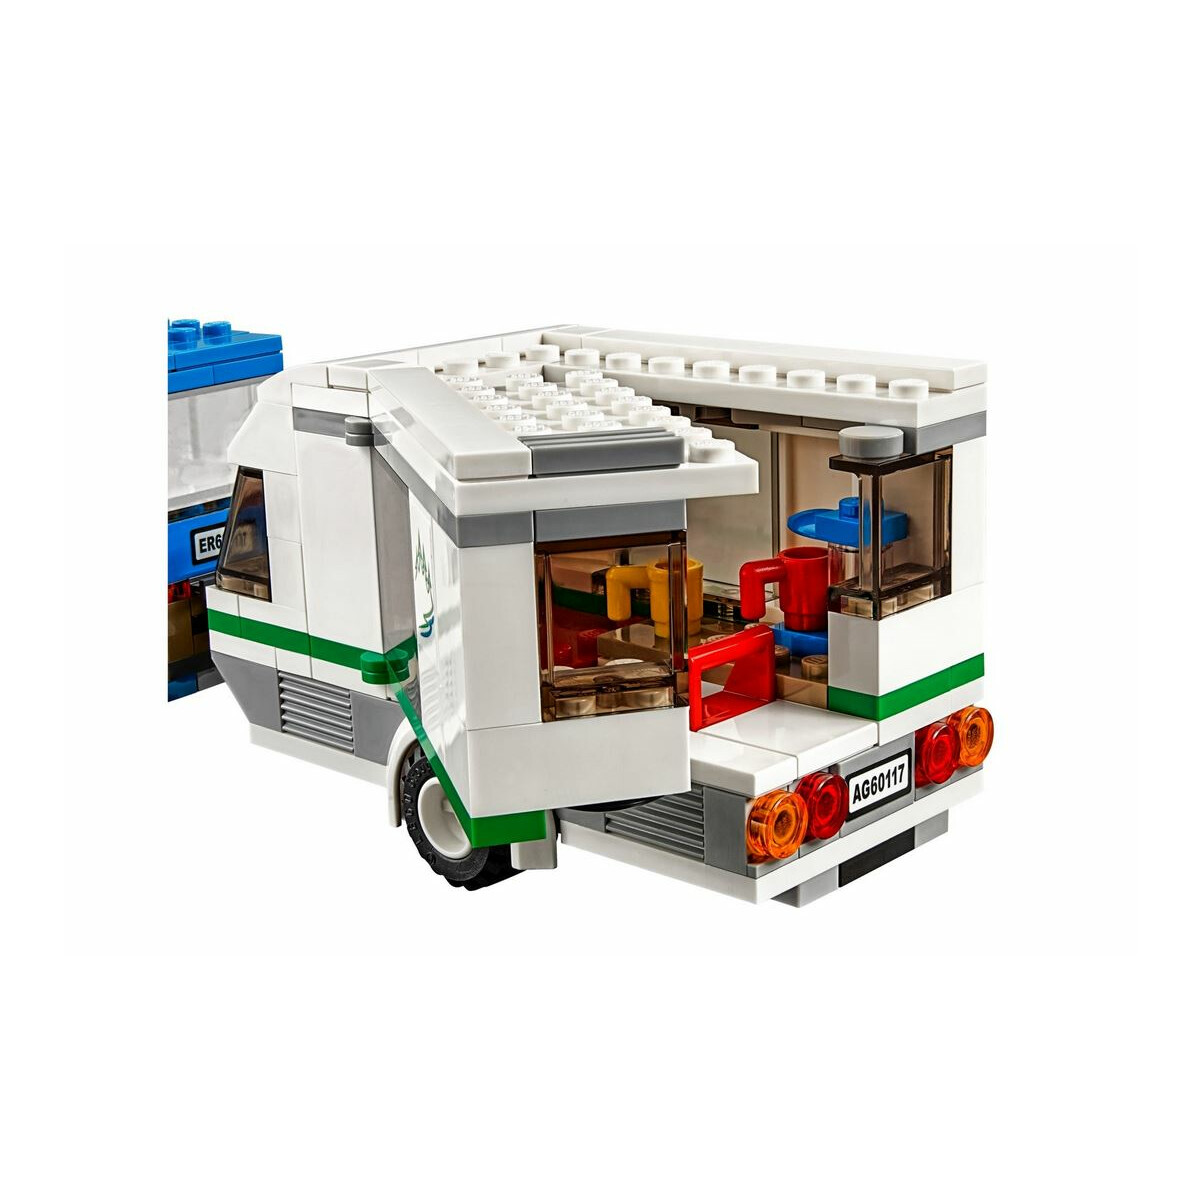 Ernest Shackleton Autocomplacencia Mus LEGO® City 60117 - Van & Wohnwagen - Shopping-Stop.de, 72,90 €